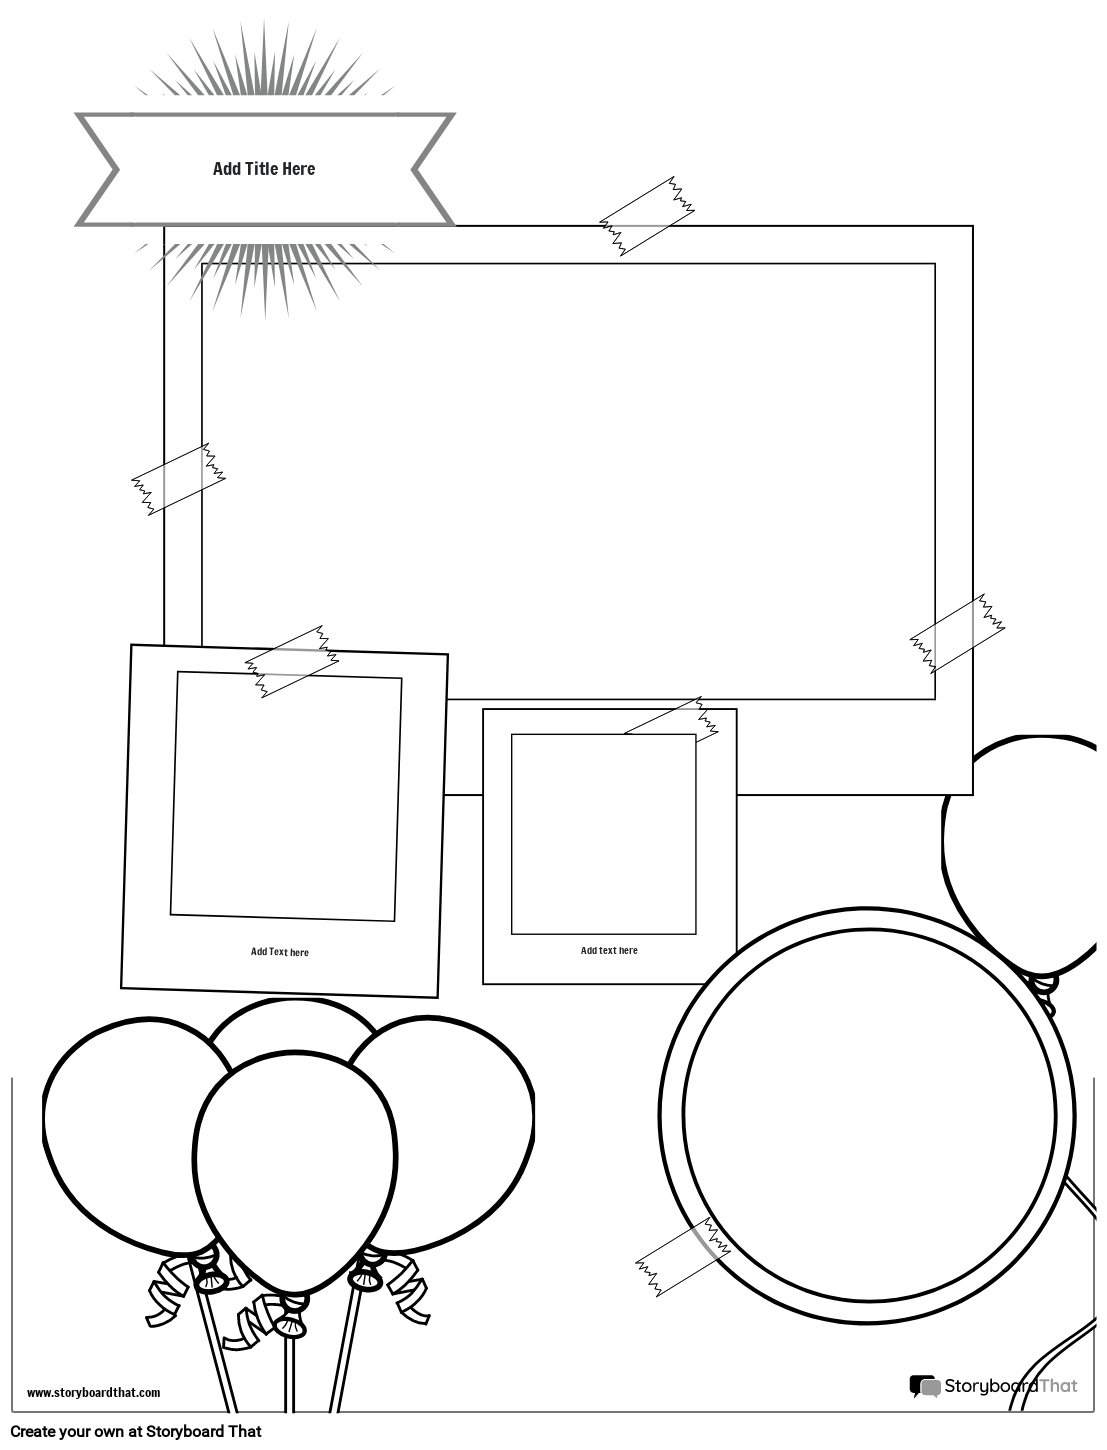 Fun Drawing Based Scrapbook Project Sheet Design